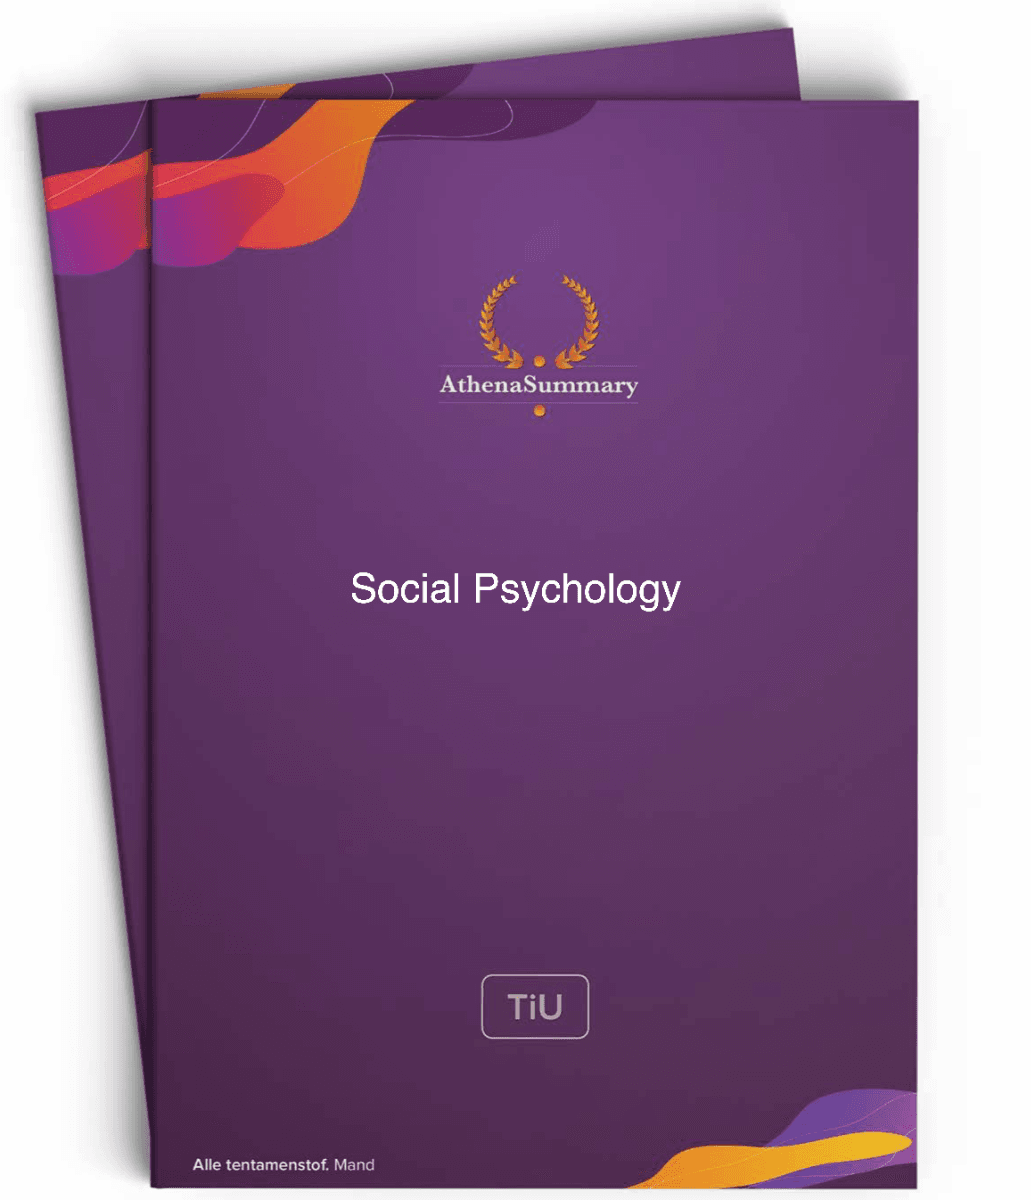 Literature Summary: Social Psychology